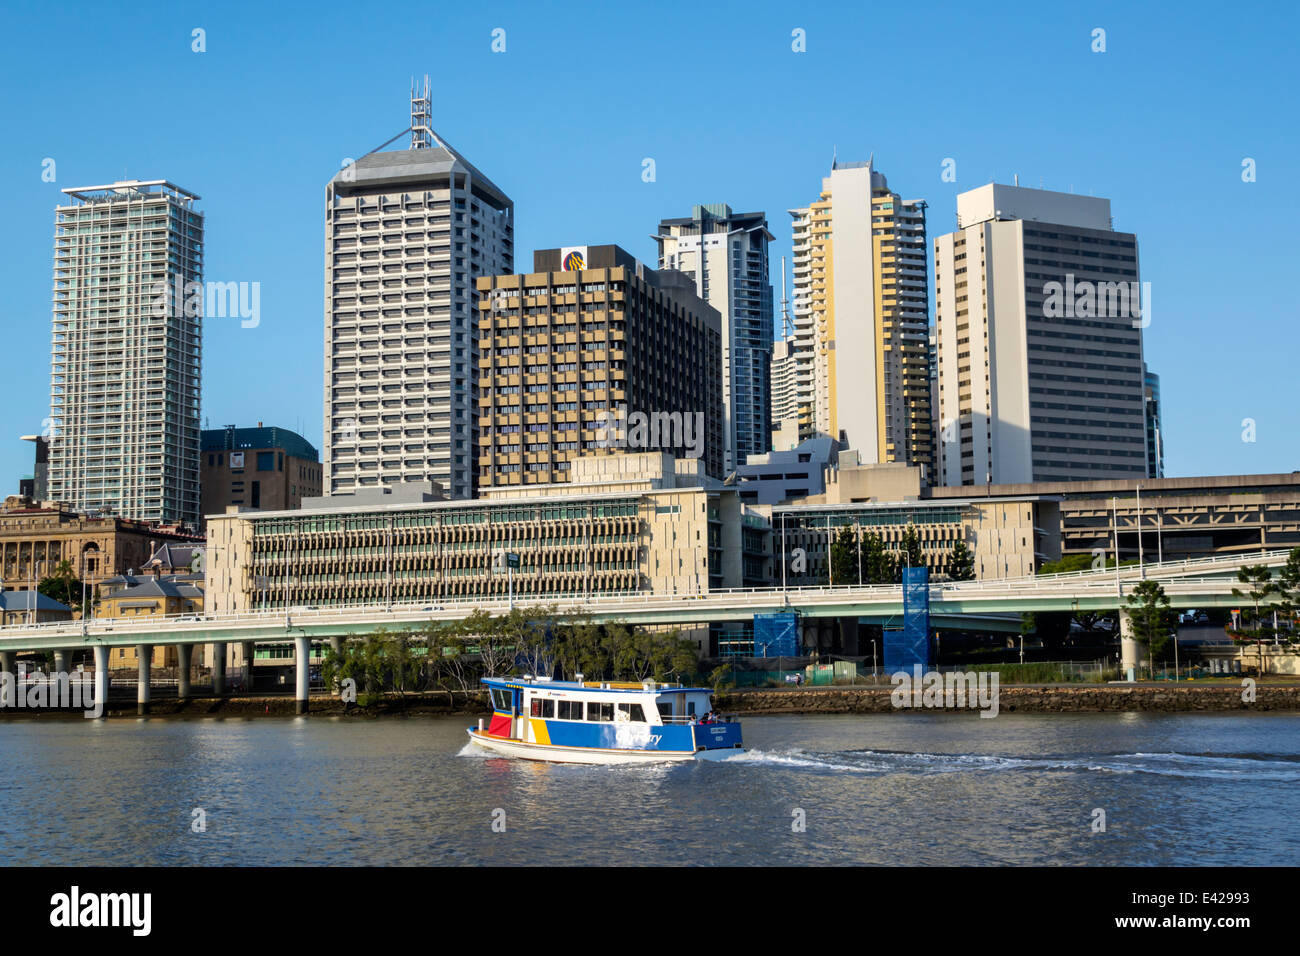 Brisbane Australia CBD,city skyline,skyscrapers,buildings,CityFerry,City Ferry,ferry,boat,TransLink,Trans Link,Pacific Motorway,M3,Brisbane River,AU14 Stock Photo